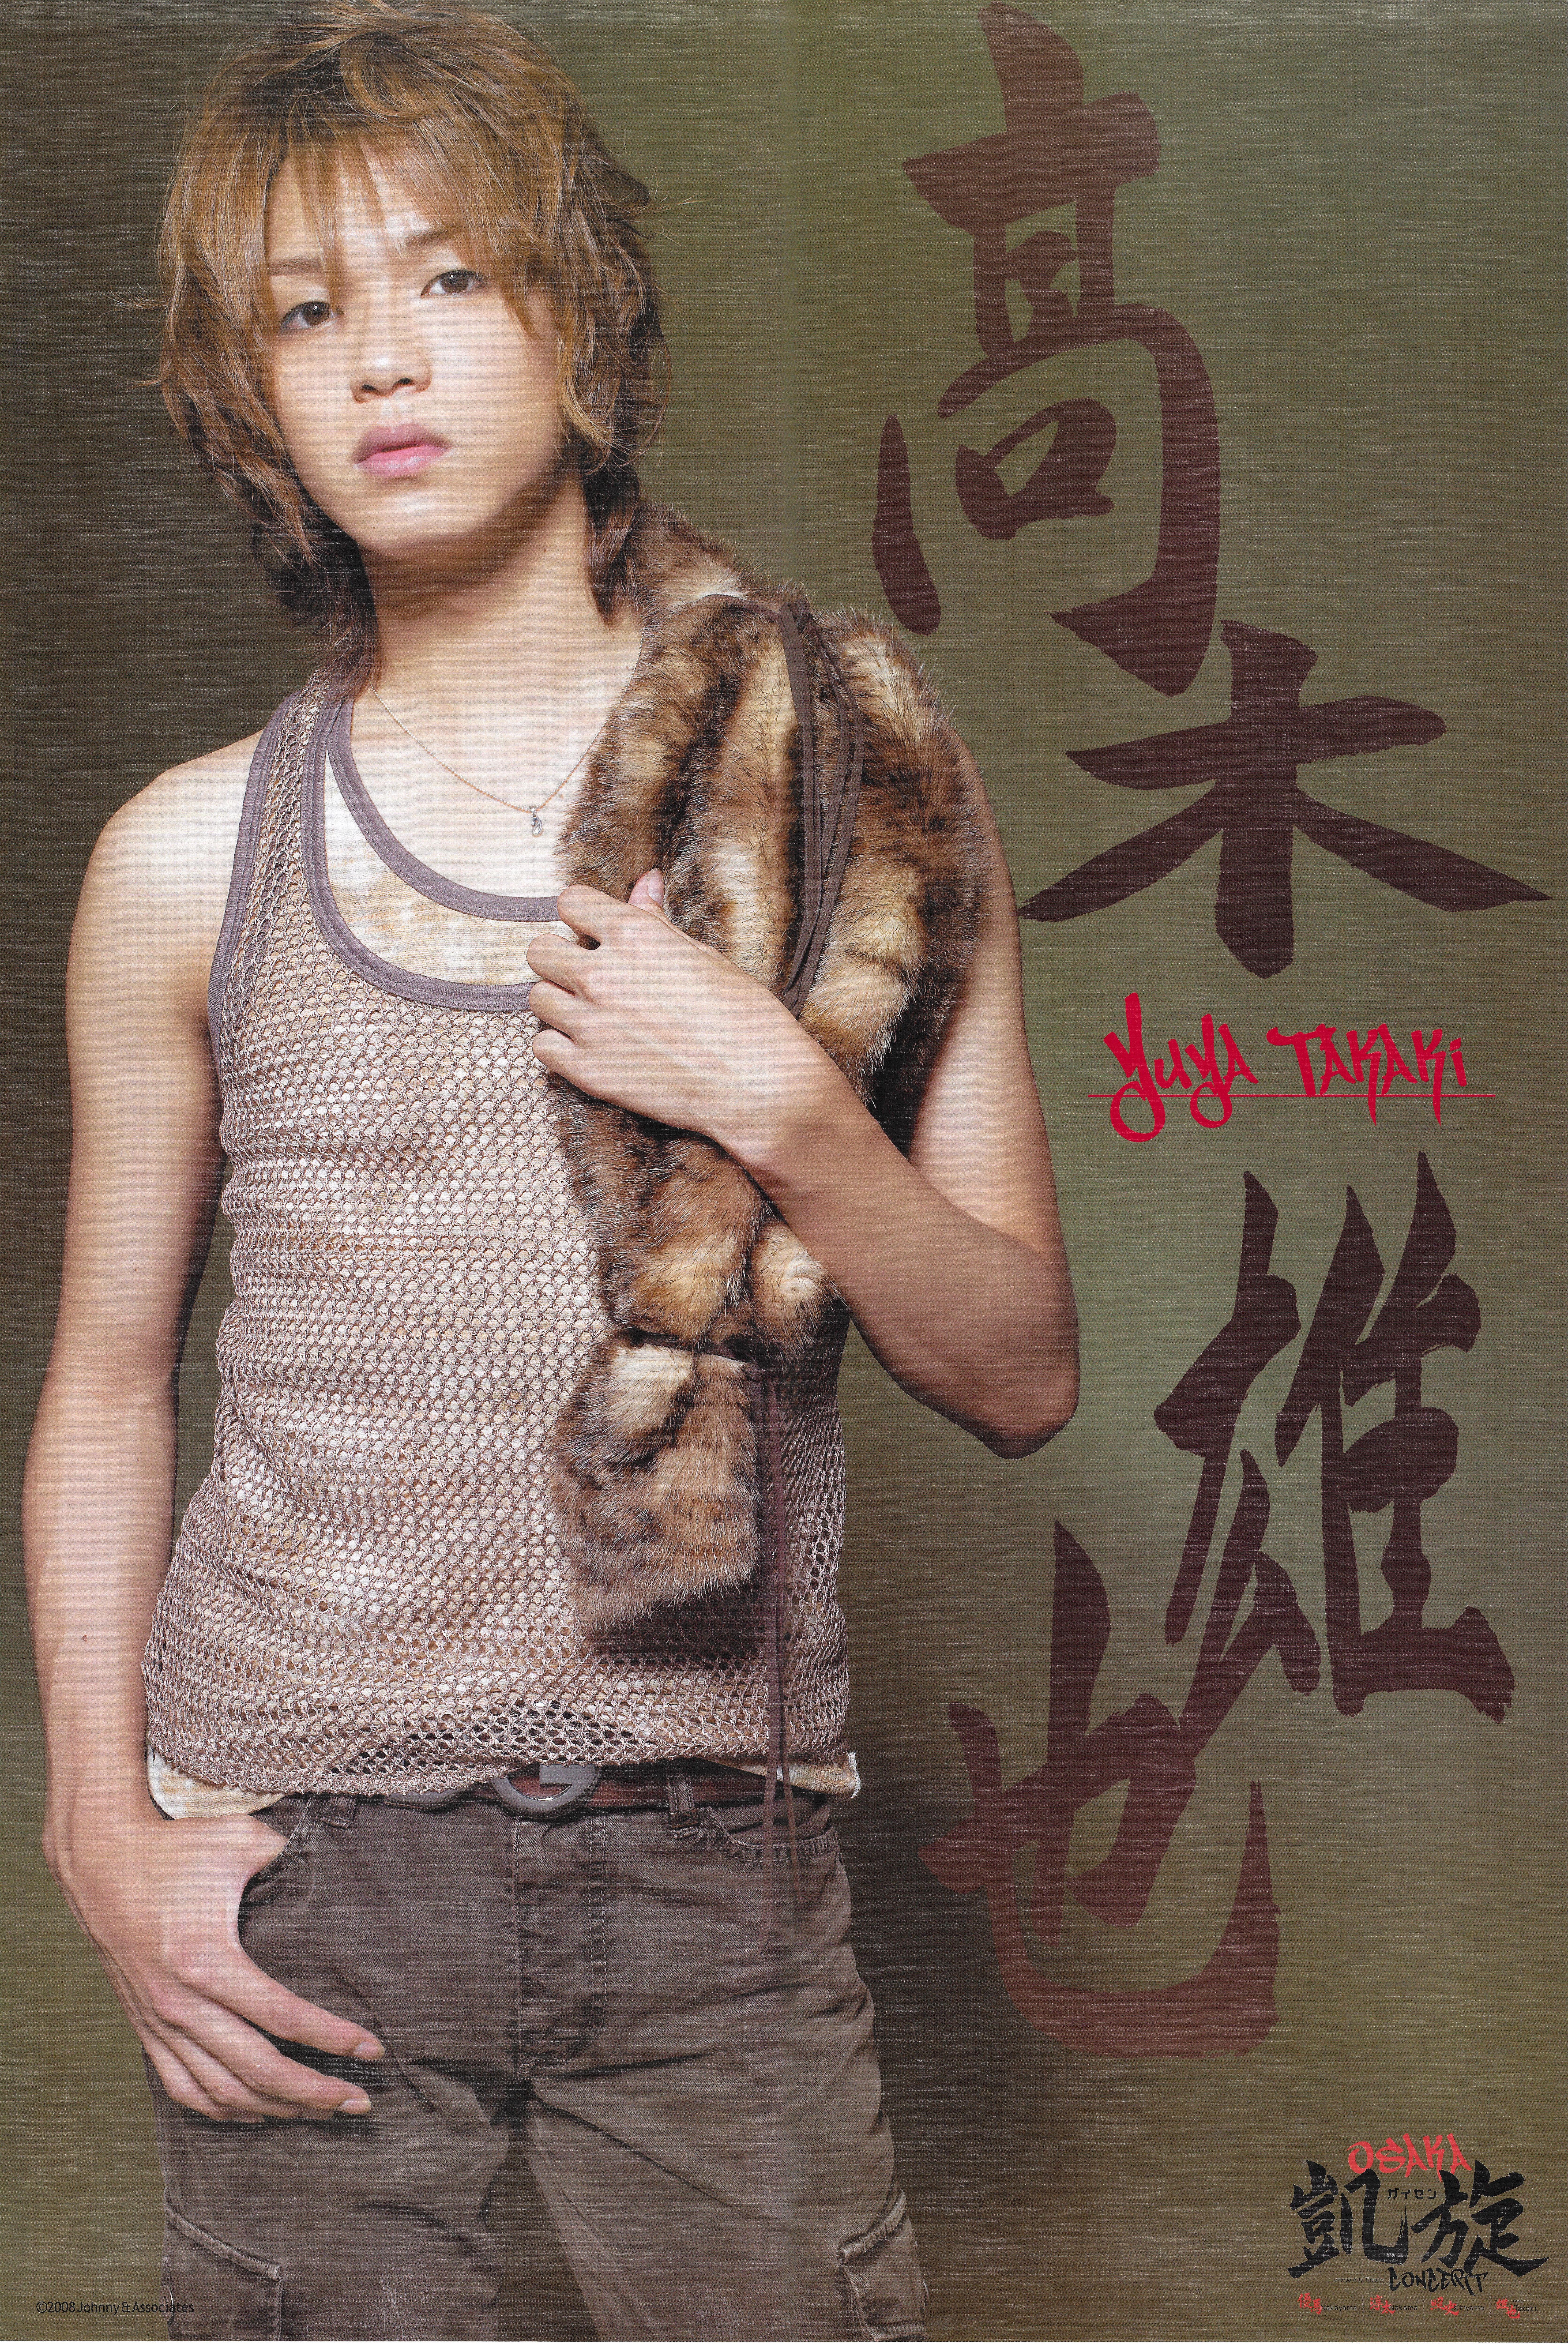 Hey! Say! JUMP 2008 OSAKA triumphant return concert Takaki Yuya poster - Picture 1 of 1